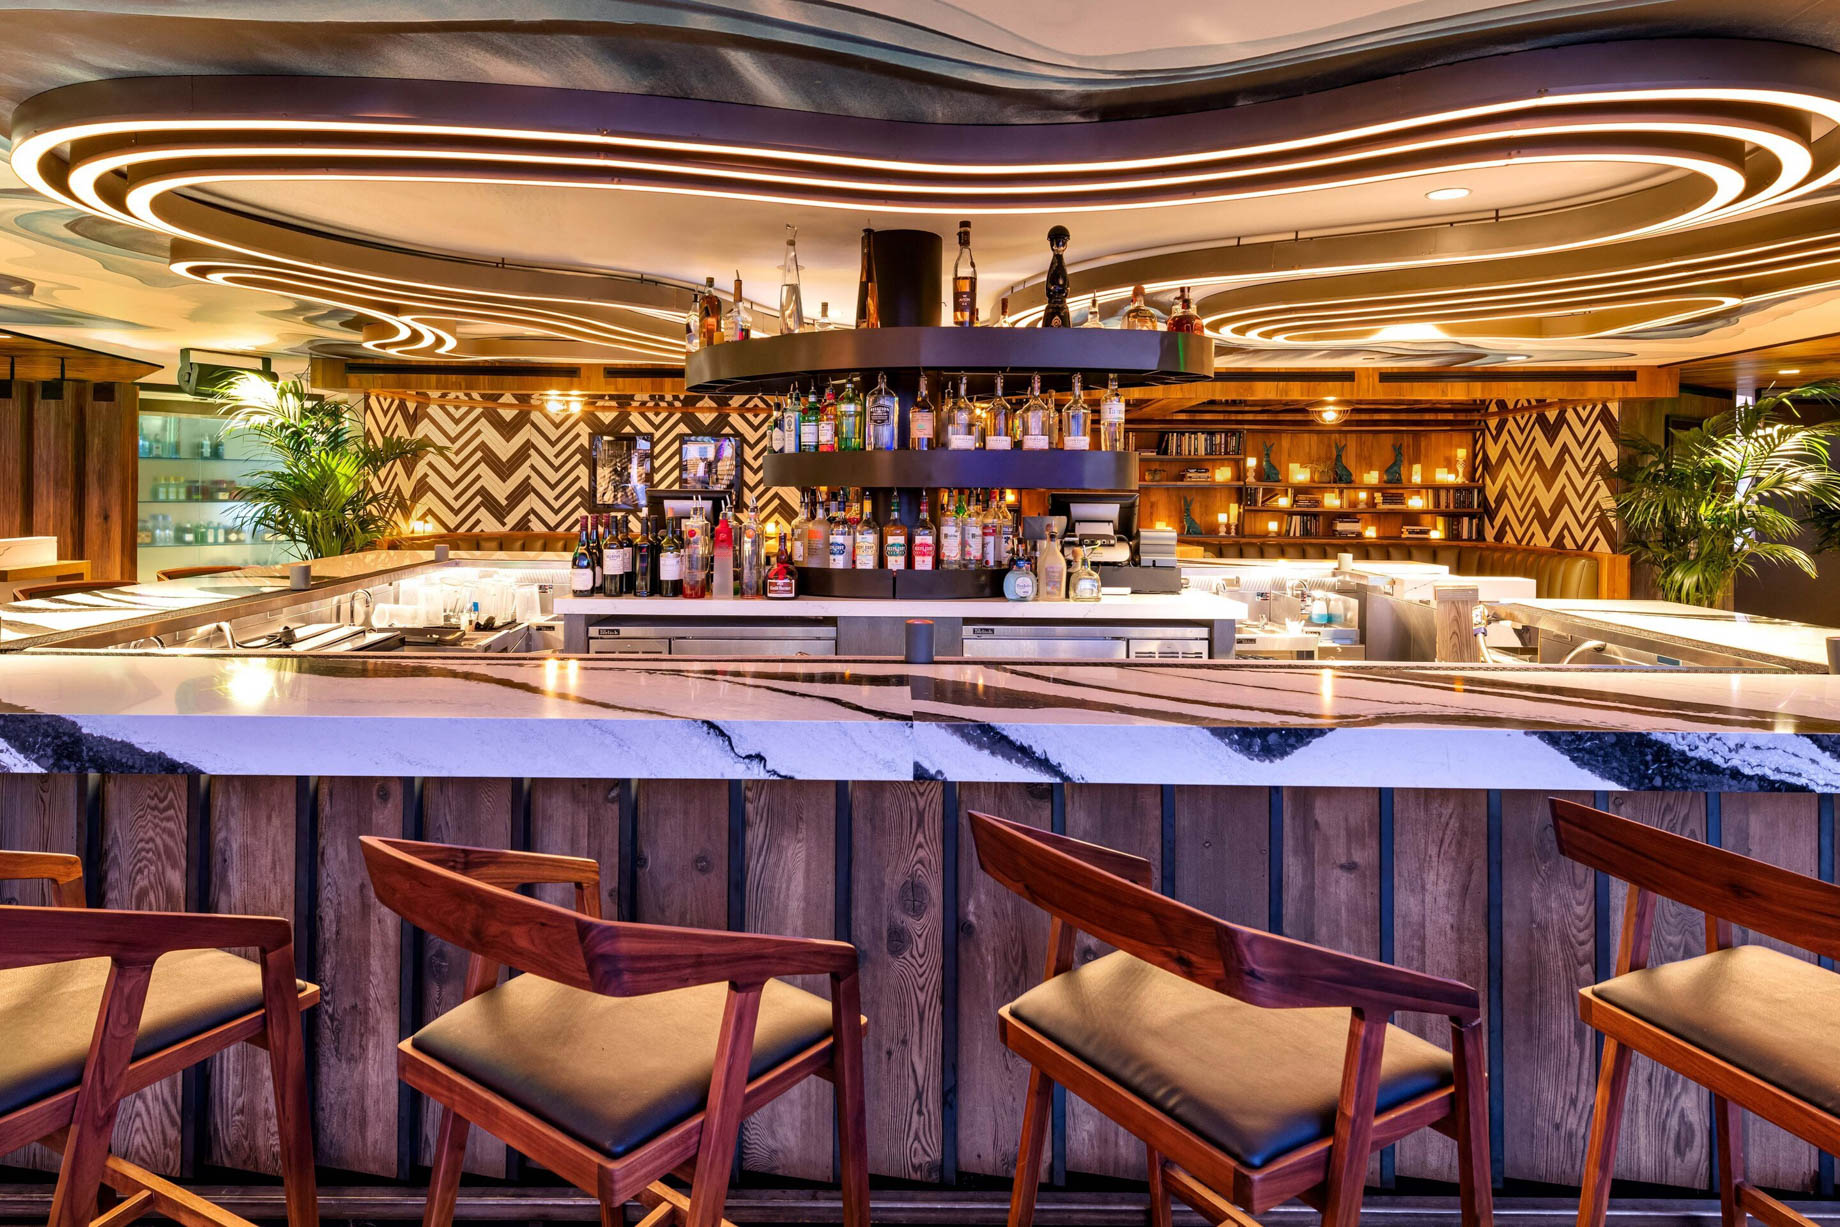 W Scottsdale Hotel – Scottsdale, AZ, USA – Cottontail Cafe and Lounge Bar Service